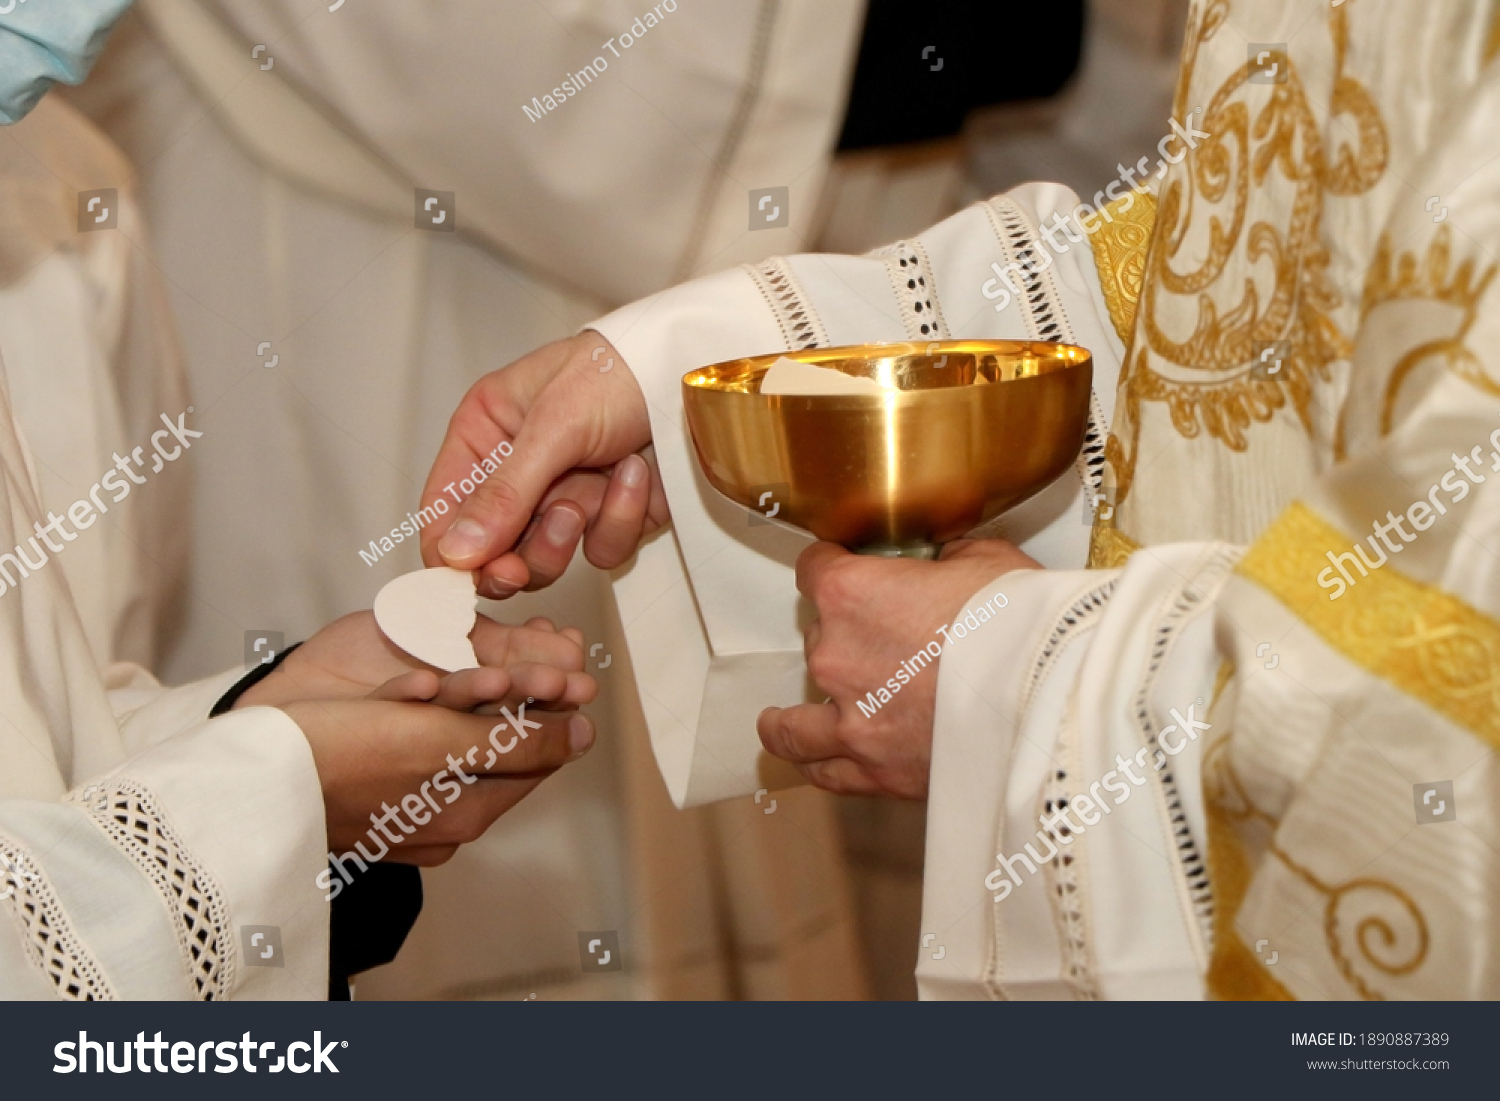 Communion rite during mass in a Catholic church #1890887389